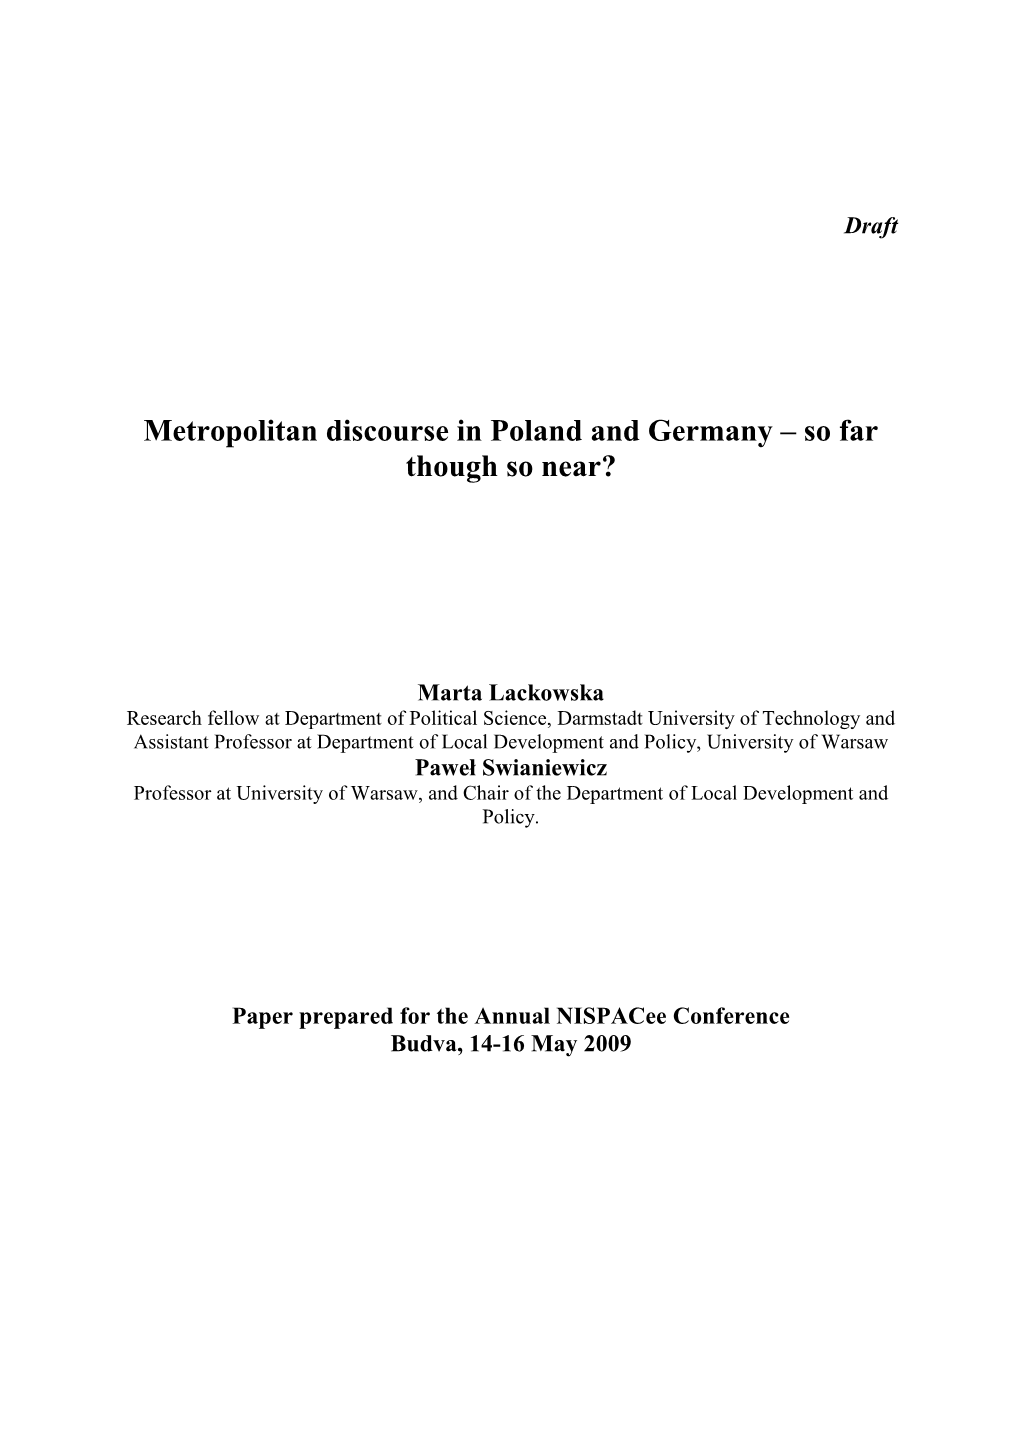 Metropolitan Discourse in Poland and Germany So Far Though So Near?